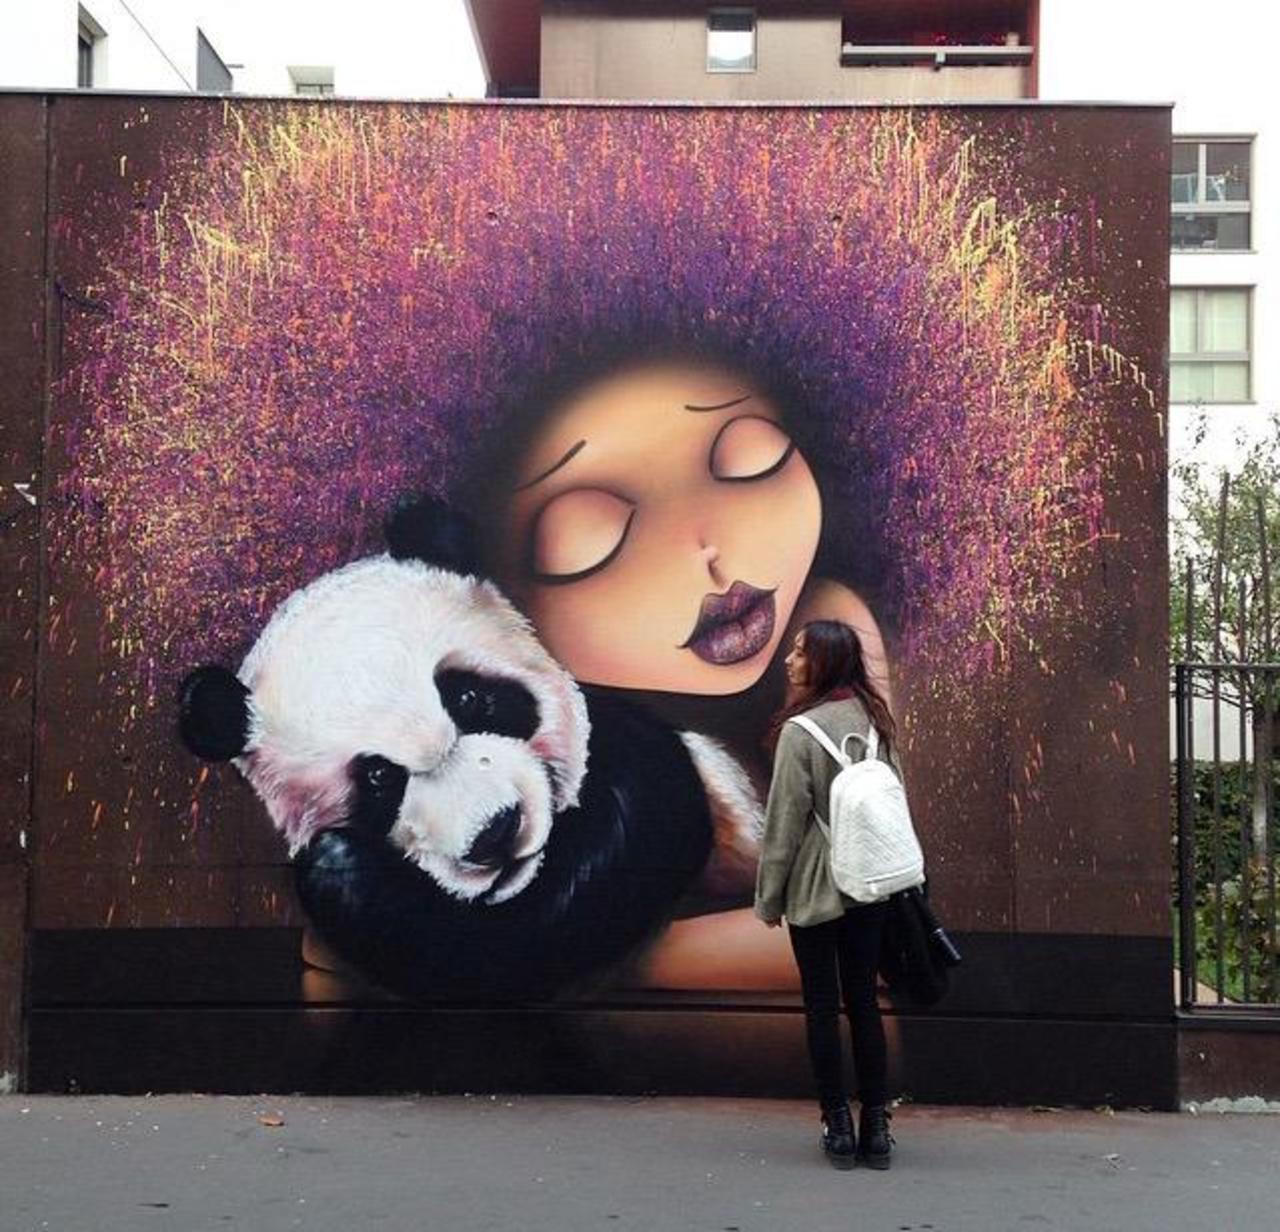 Street Art by VinieGraffiti in Paris 

#art #graffiti #mural #streetart http://t.co/ApY5AMwMO2